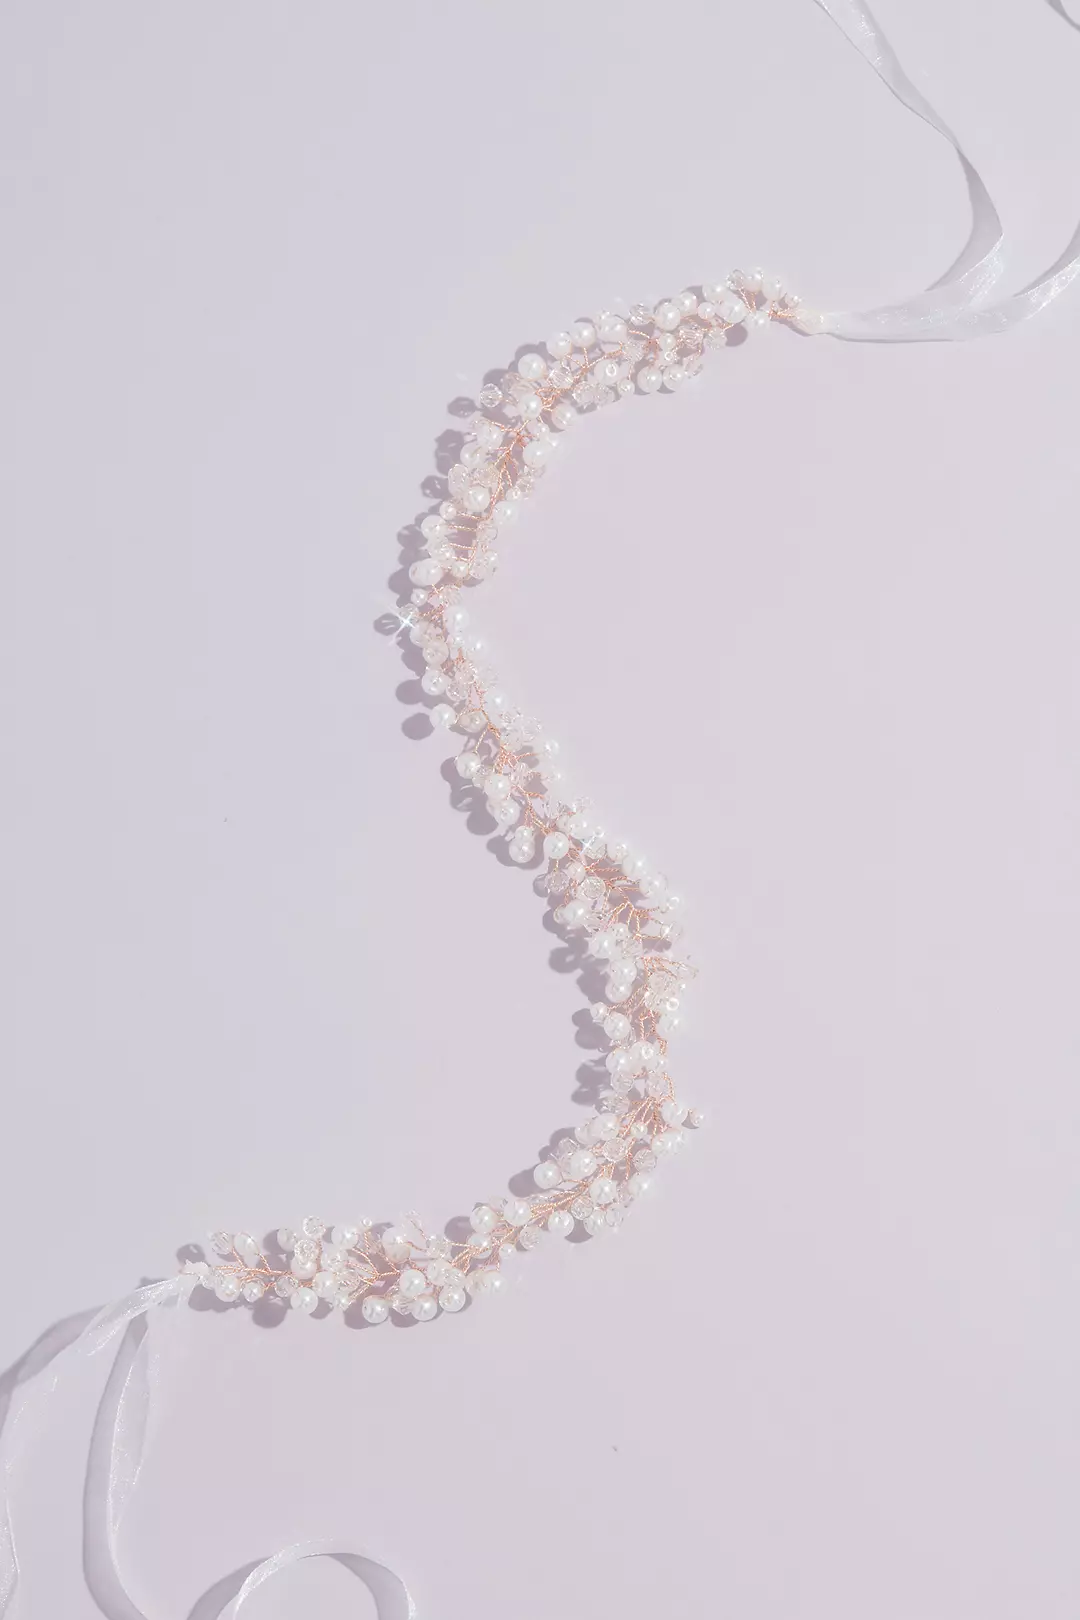 Pearl and Crystal Hair Wreath with Organza Ribbon Image